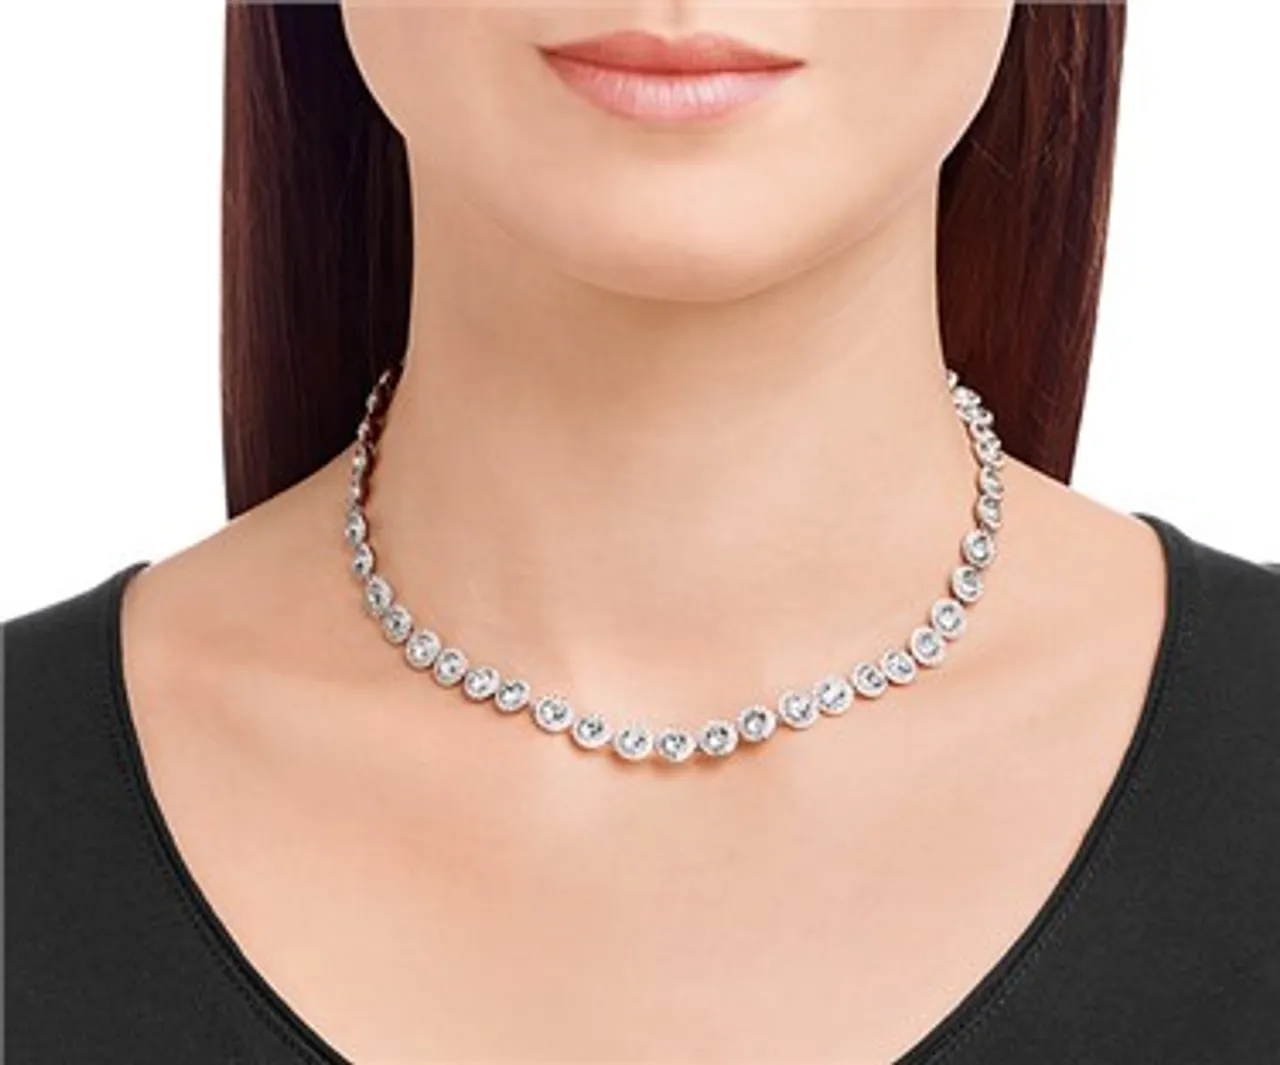 Swarovski Angelic Crystal Necklace - Adjustable